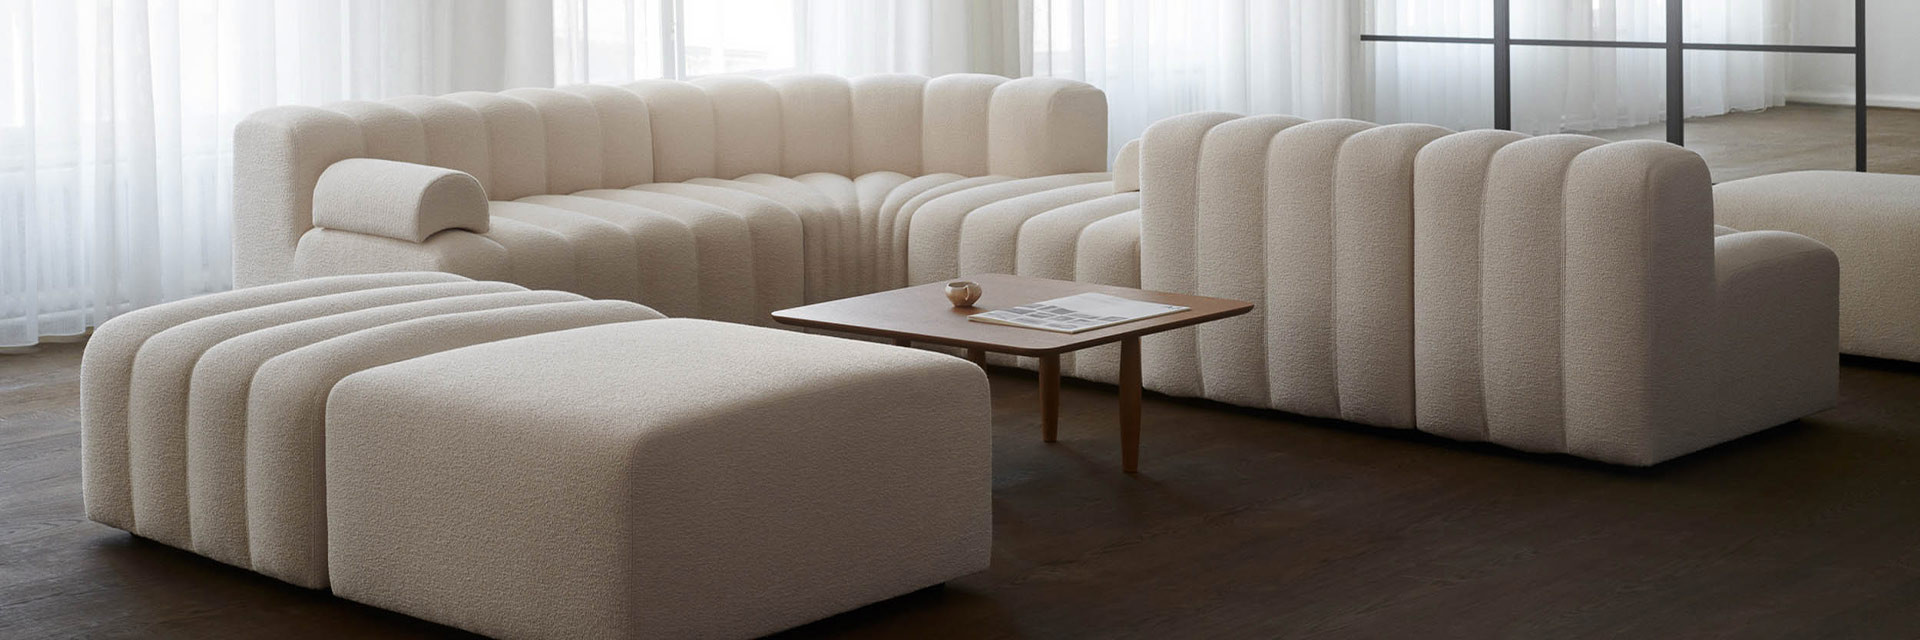 Luxury Scandinavian design sofa and high quality Danish furniture